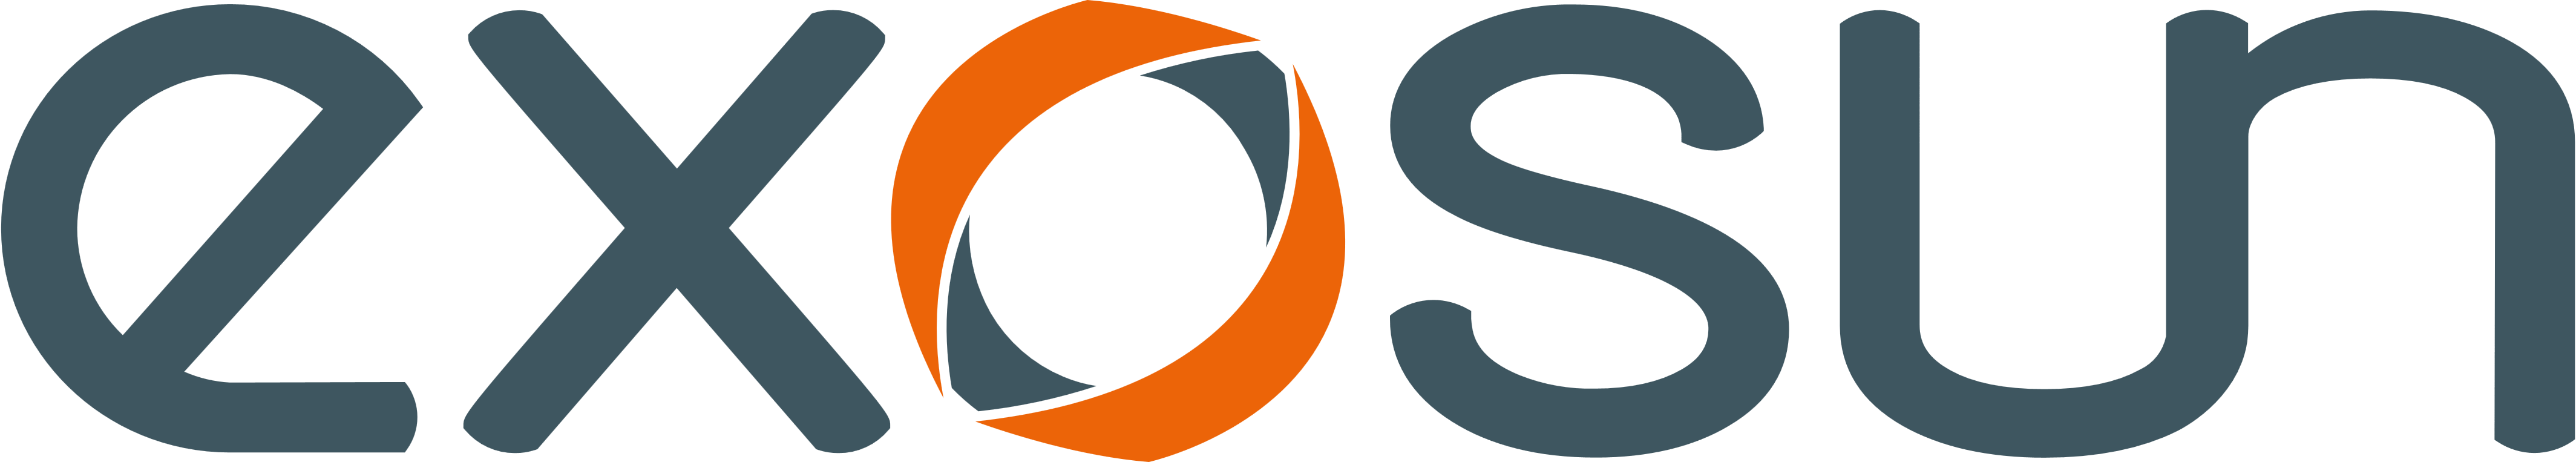 Exosun Logo, Logotipo - Logo Exosun (4257x763)